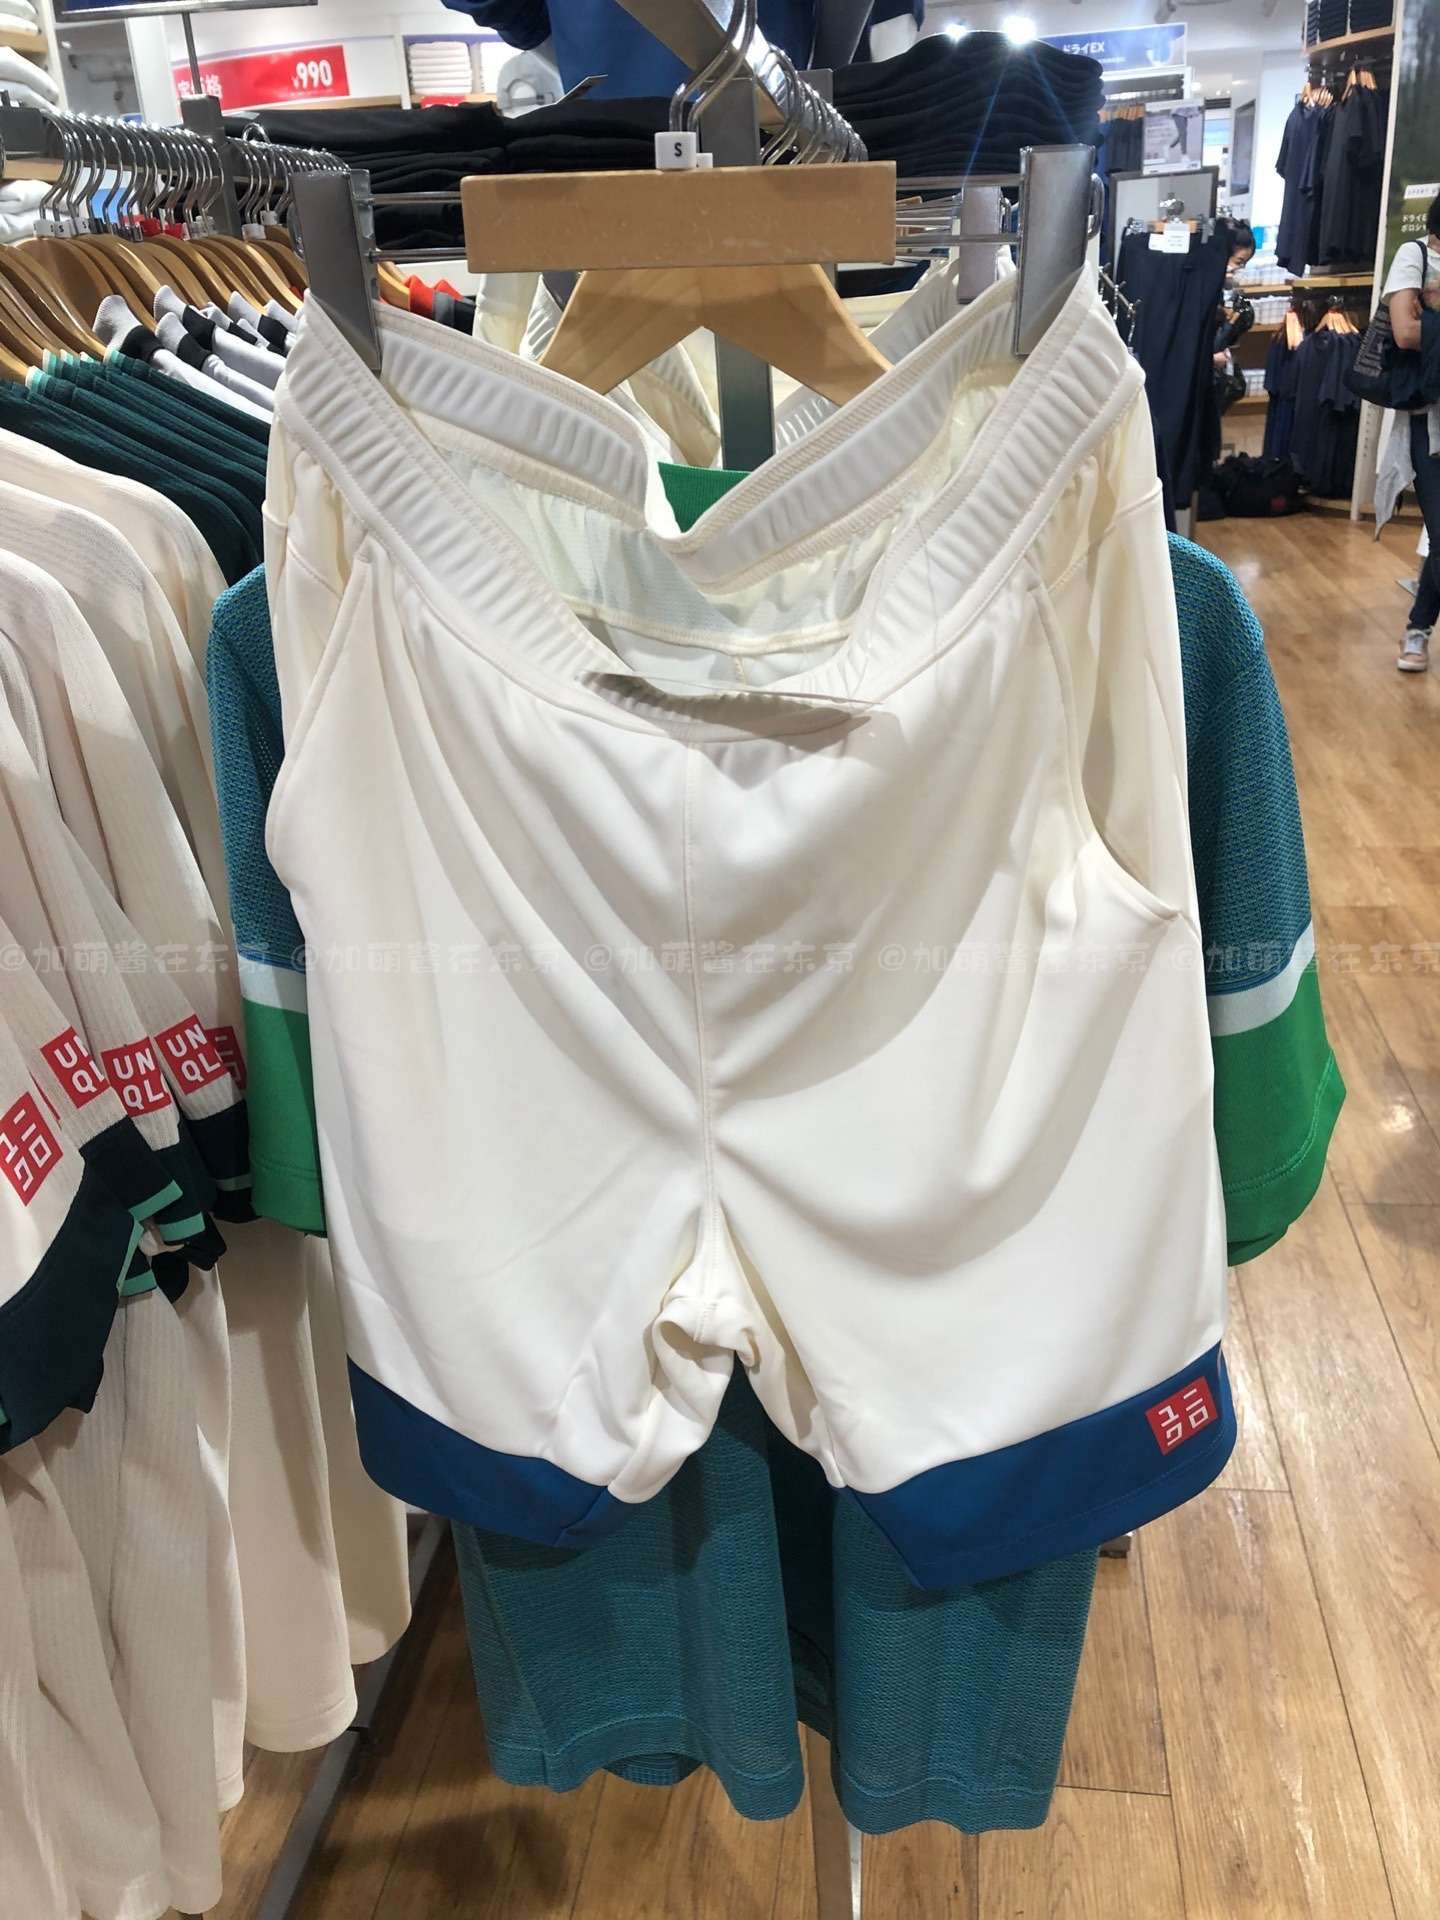 Kei Nishikori 2021 Uniqlo Wimbledon Us Open TShirts Shorts Outfits